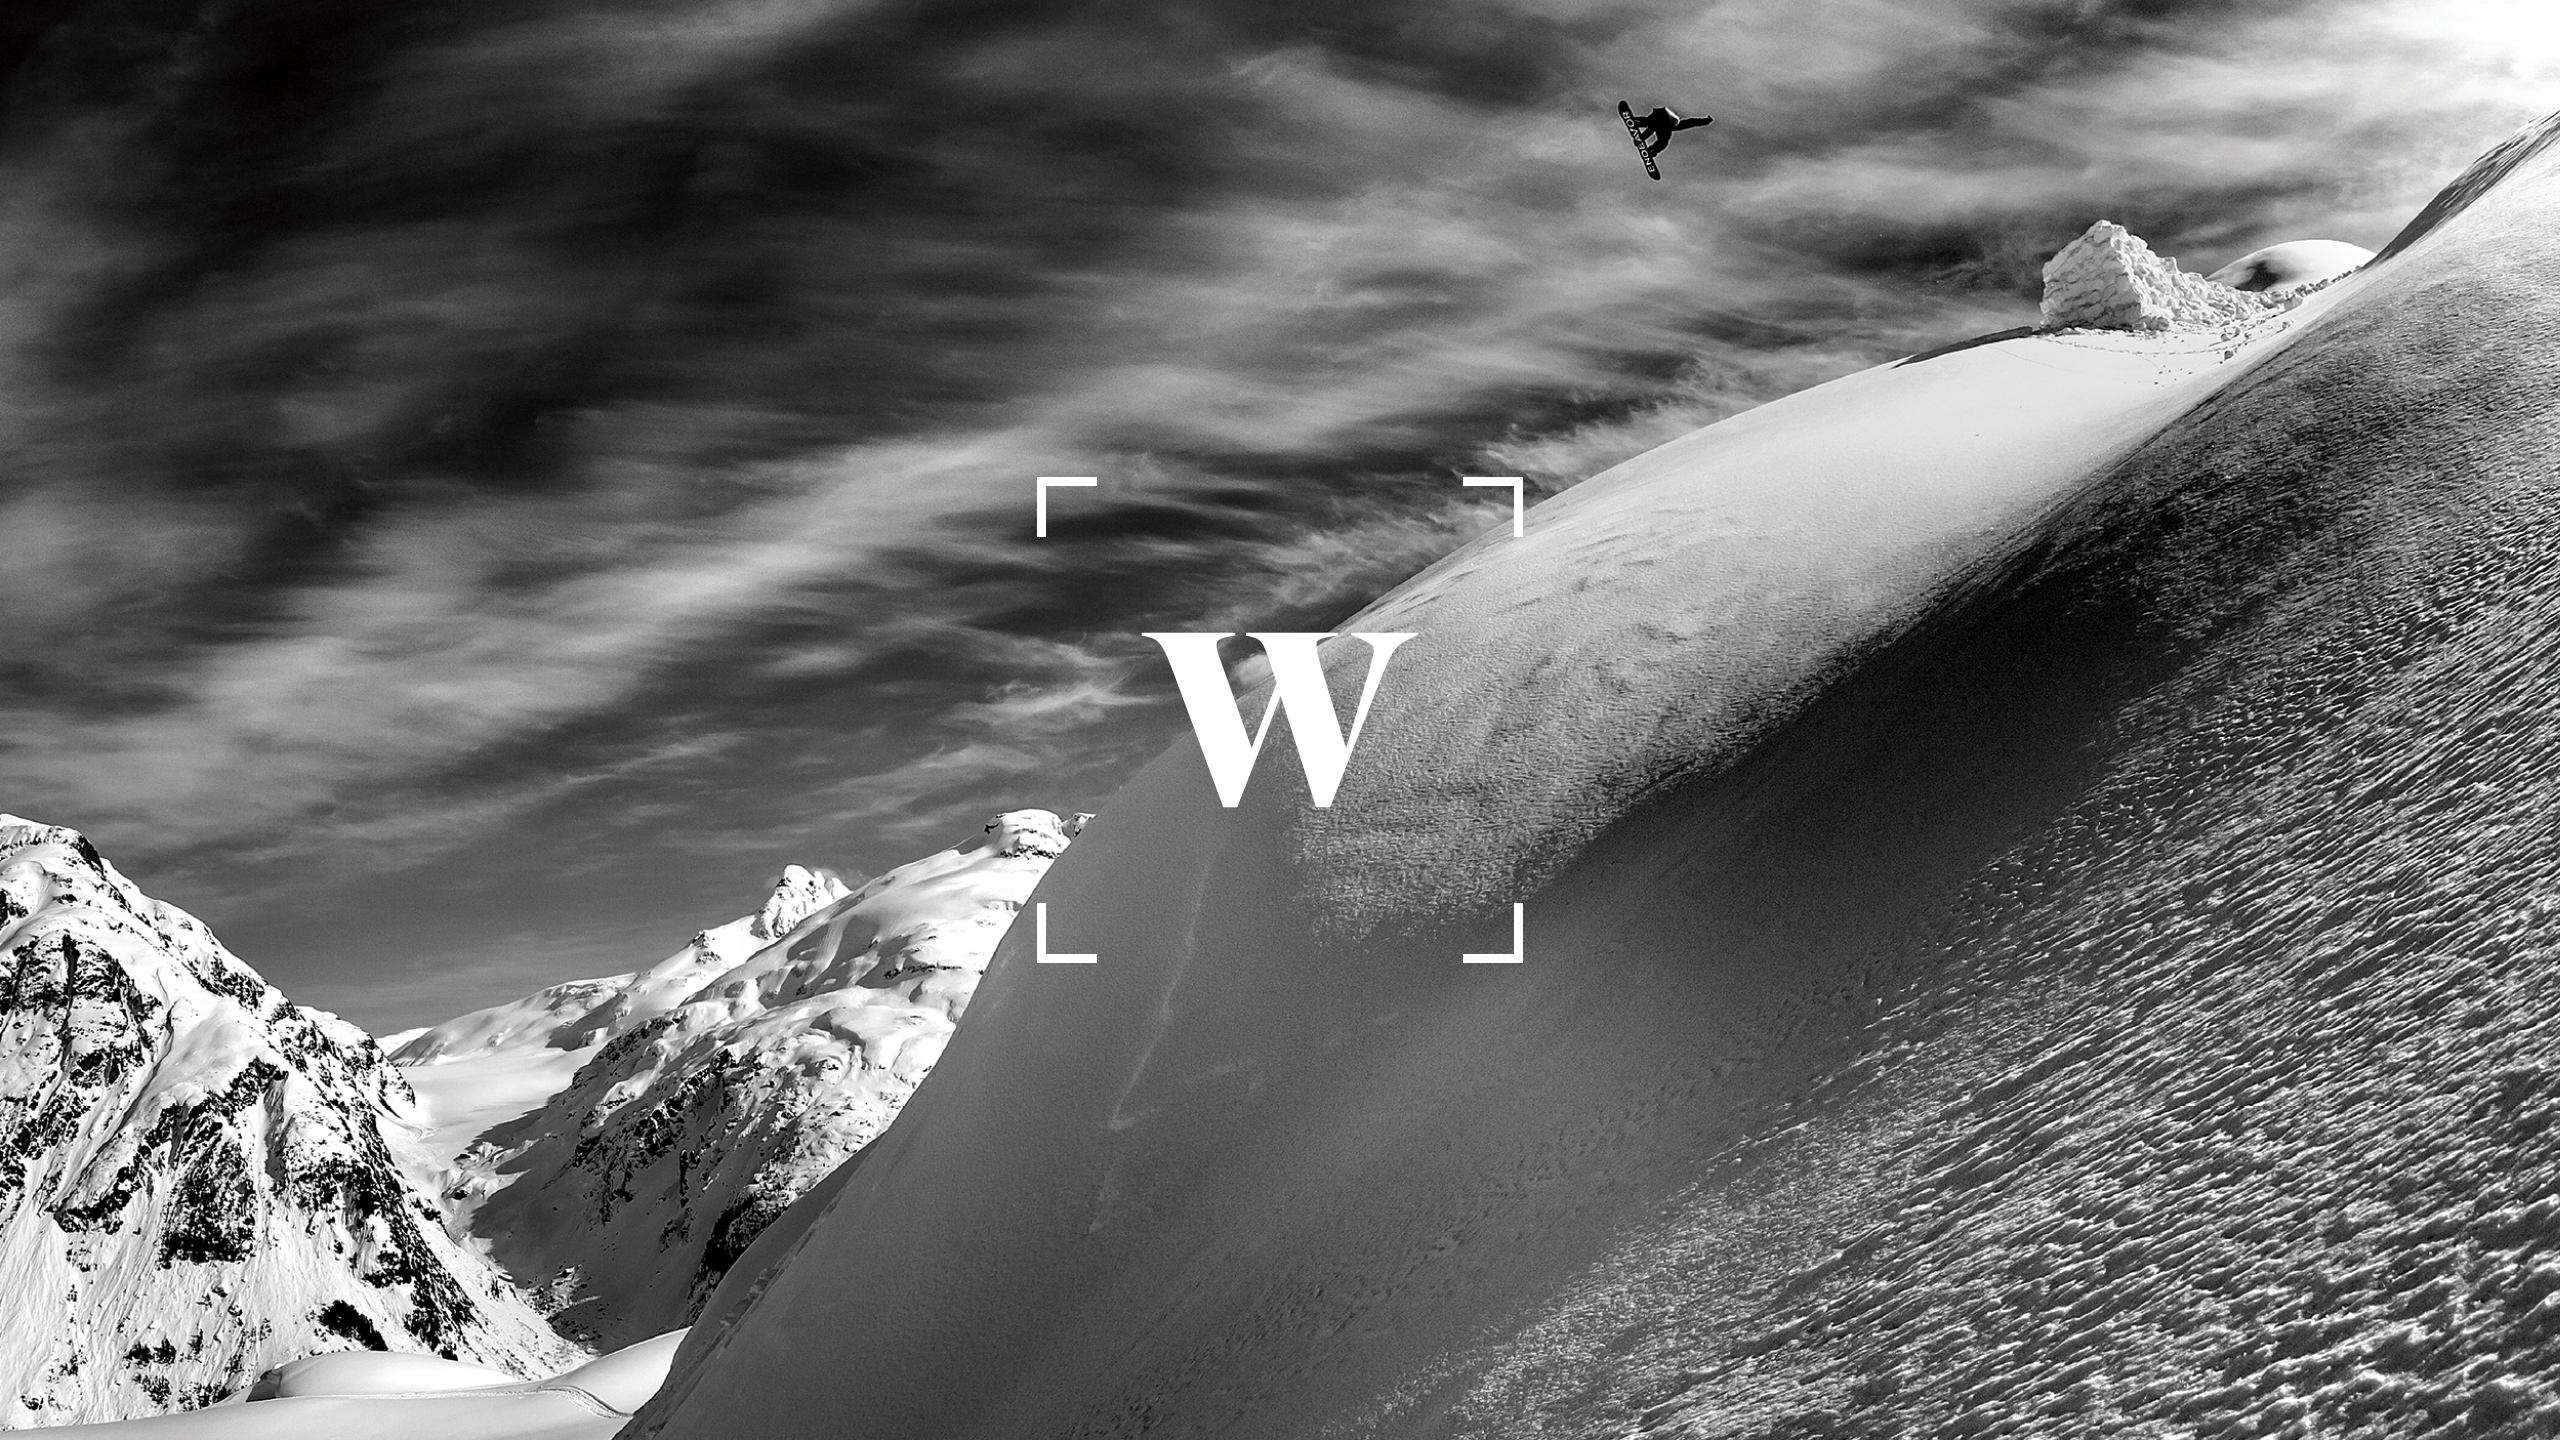 Wallpaper Wednesday Origins Backcountry TransWorld SNOWboarding